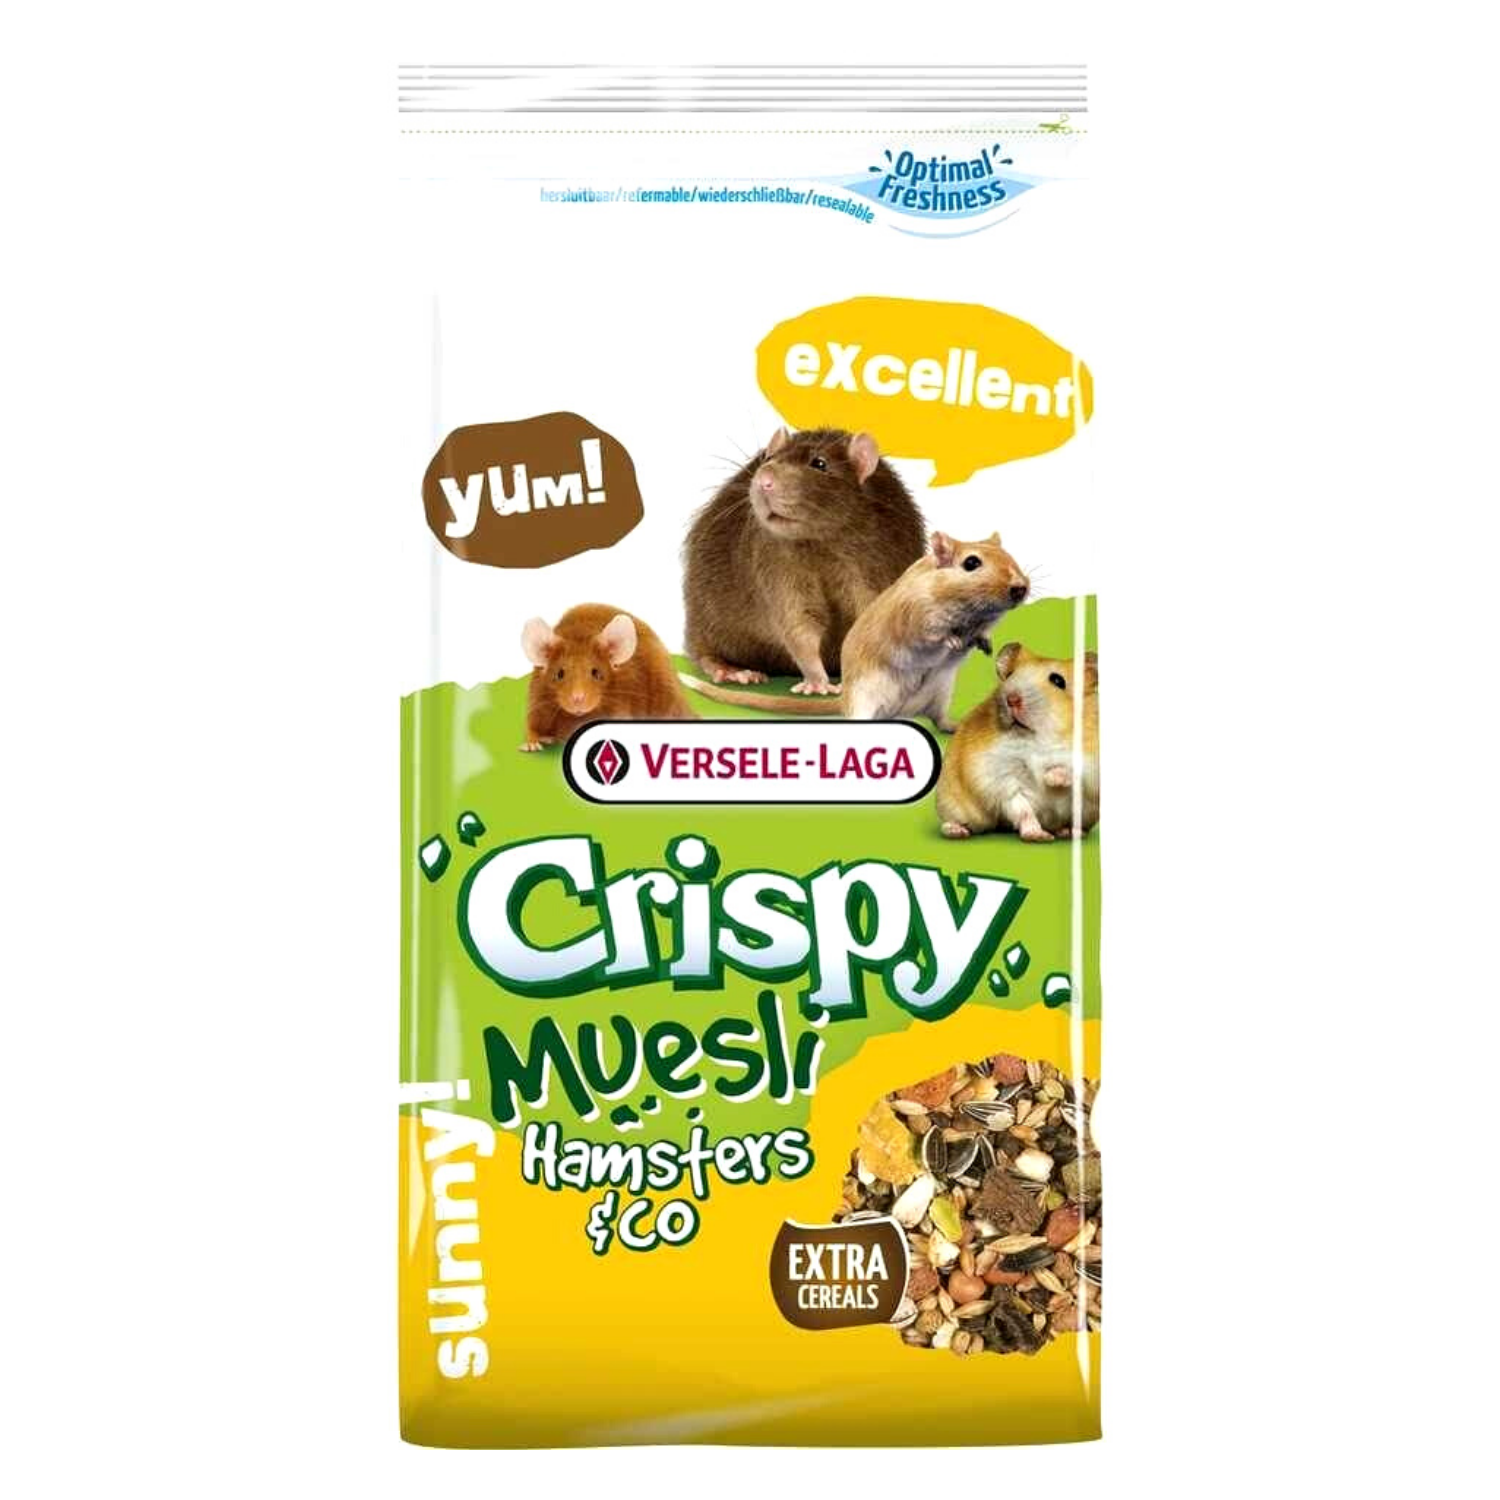 Versele-Laga Crispy Muesli Hamster and Co - 400g / 1kg / 2.75kg / 20kg